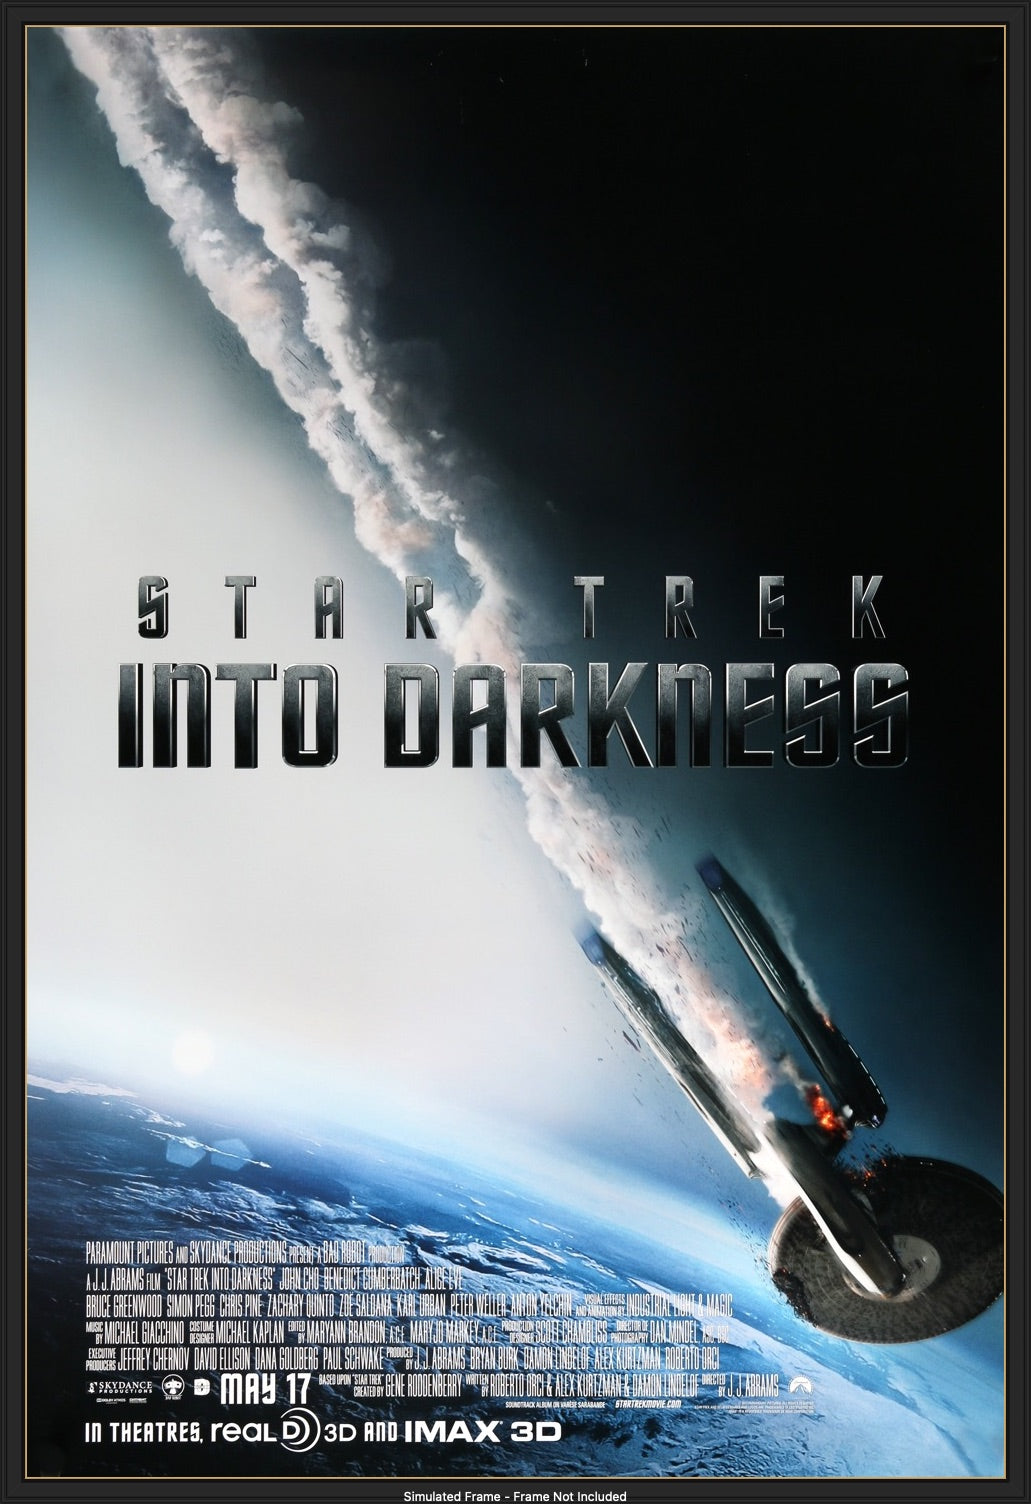 Star Trek Into Darkness (2013) original movie poster for sale at Original Film Art